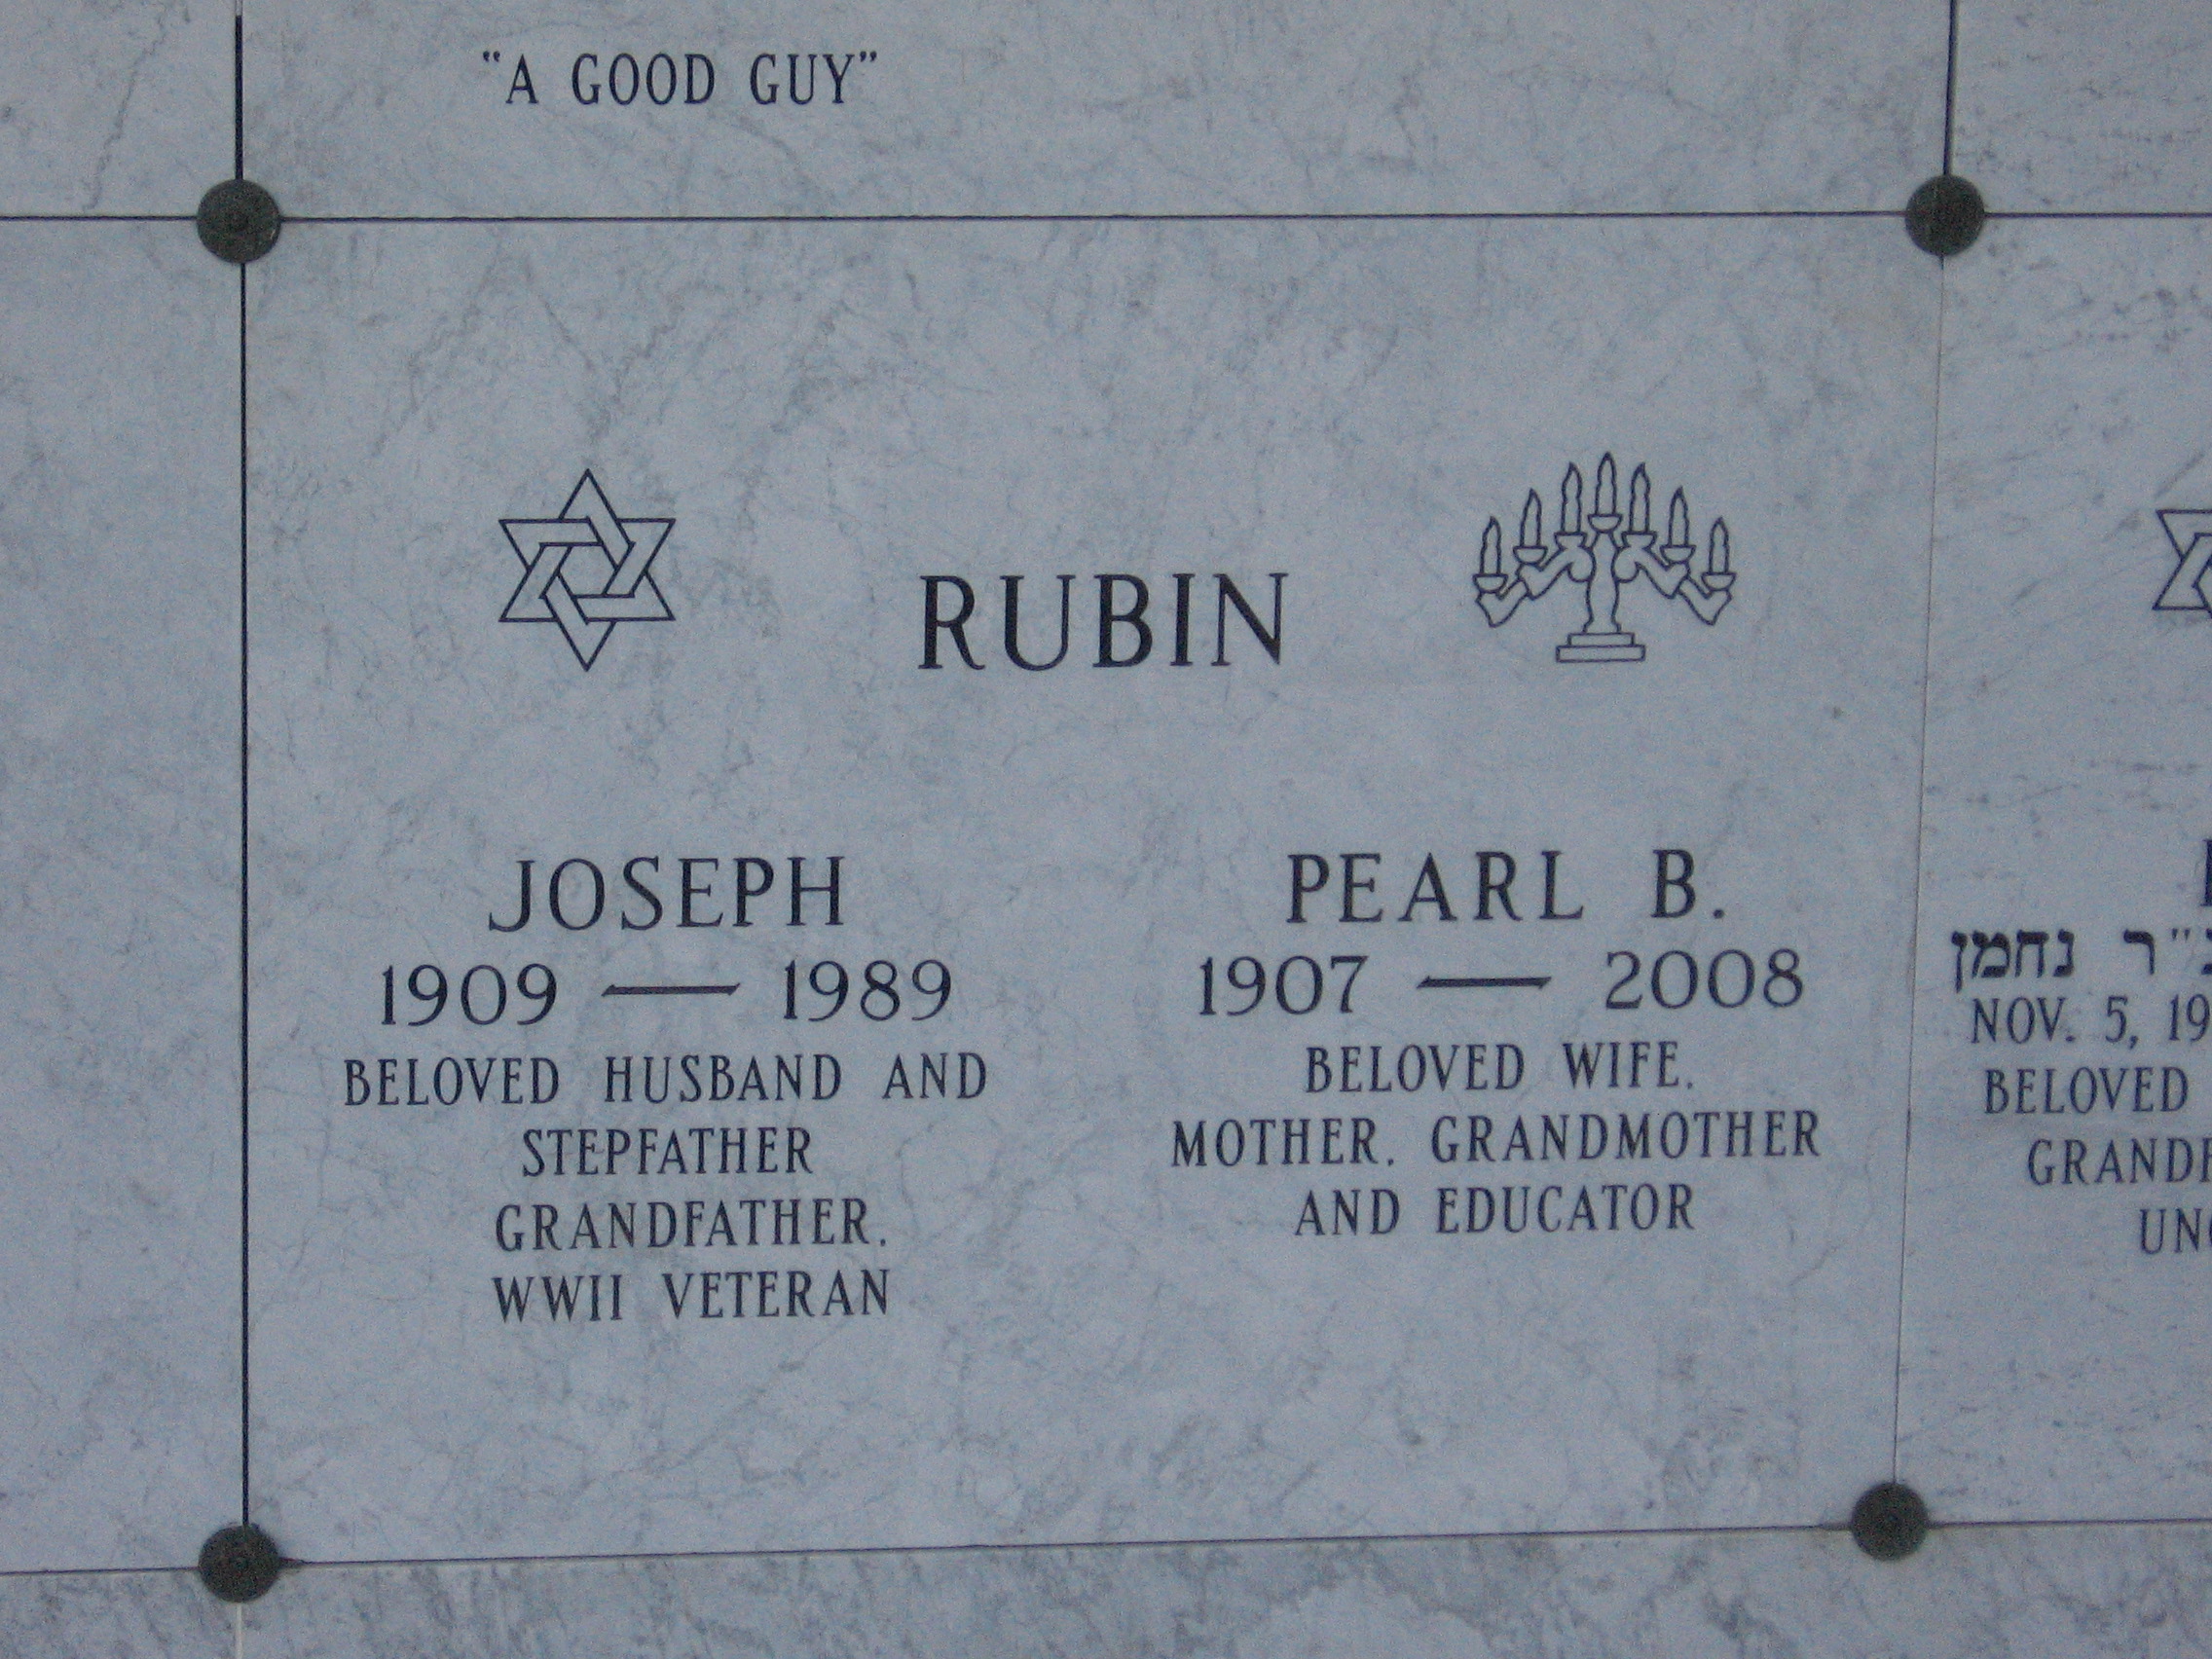 Joseph Rubin